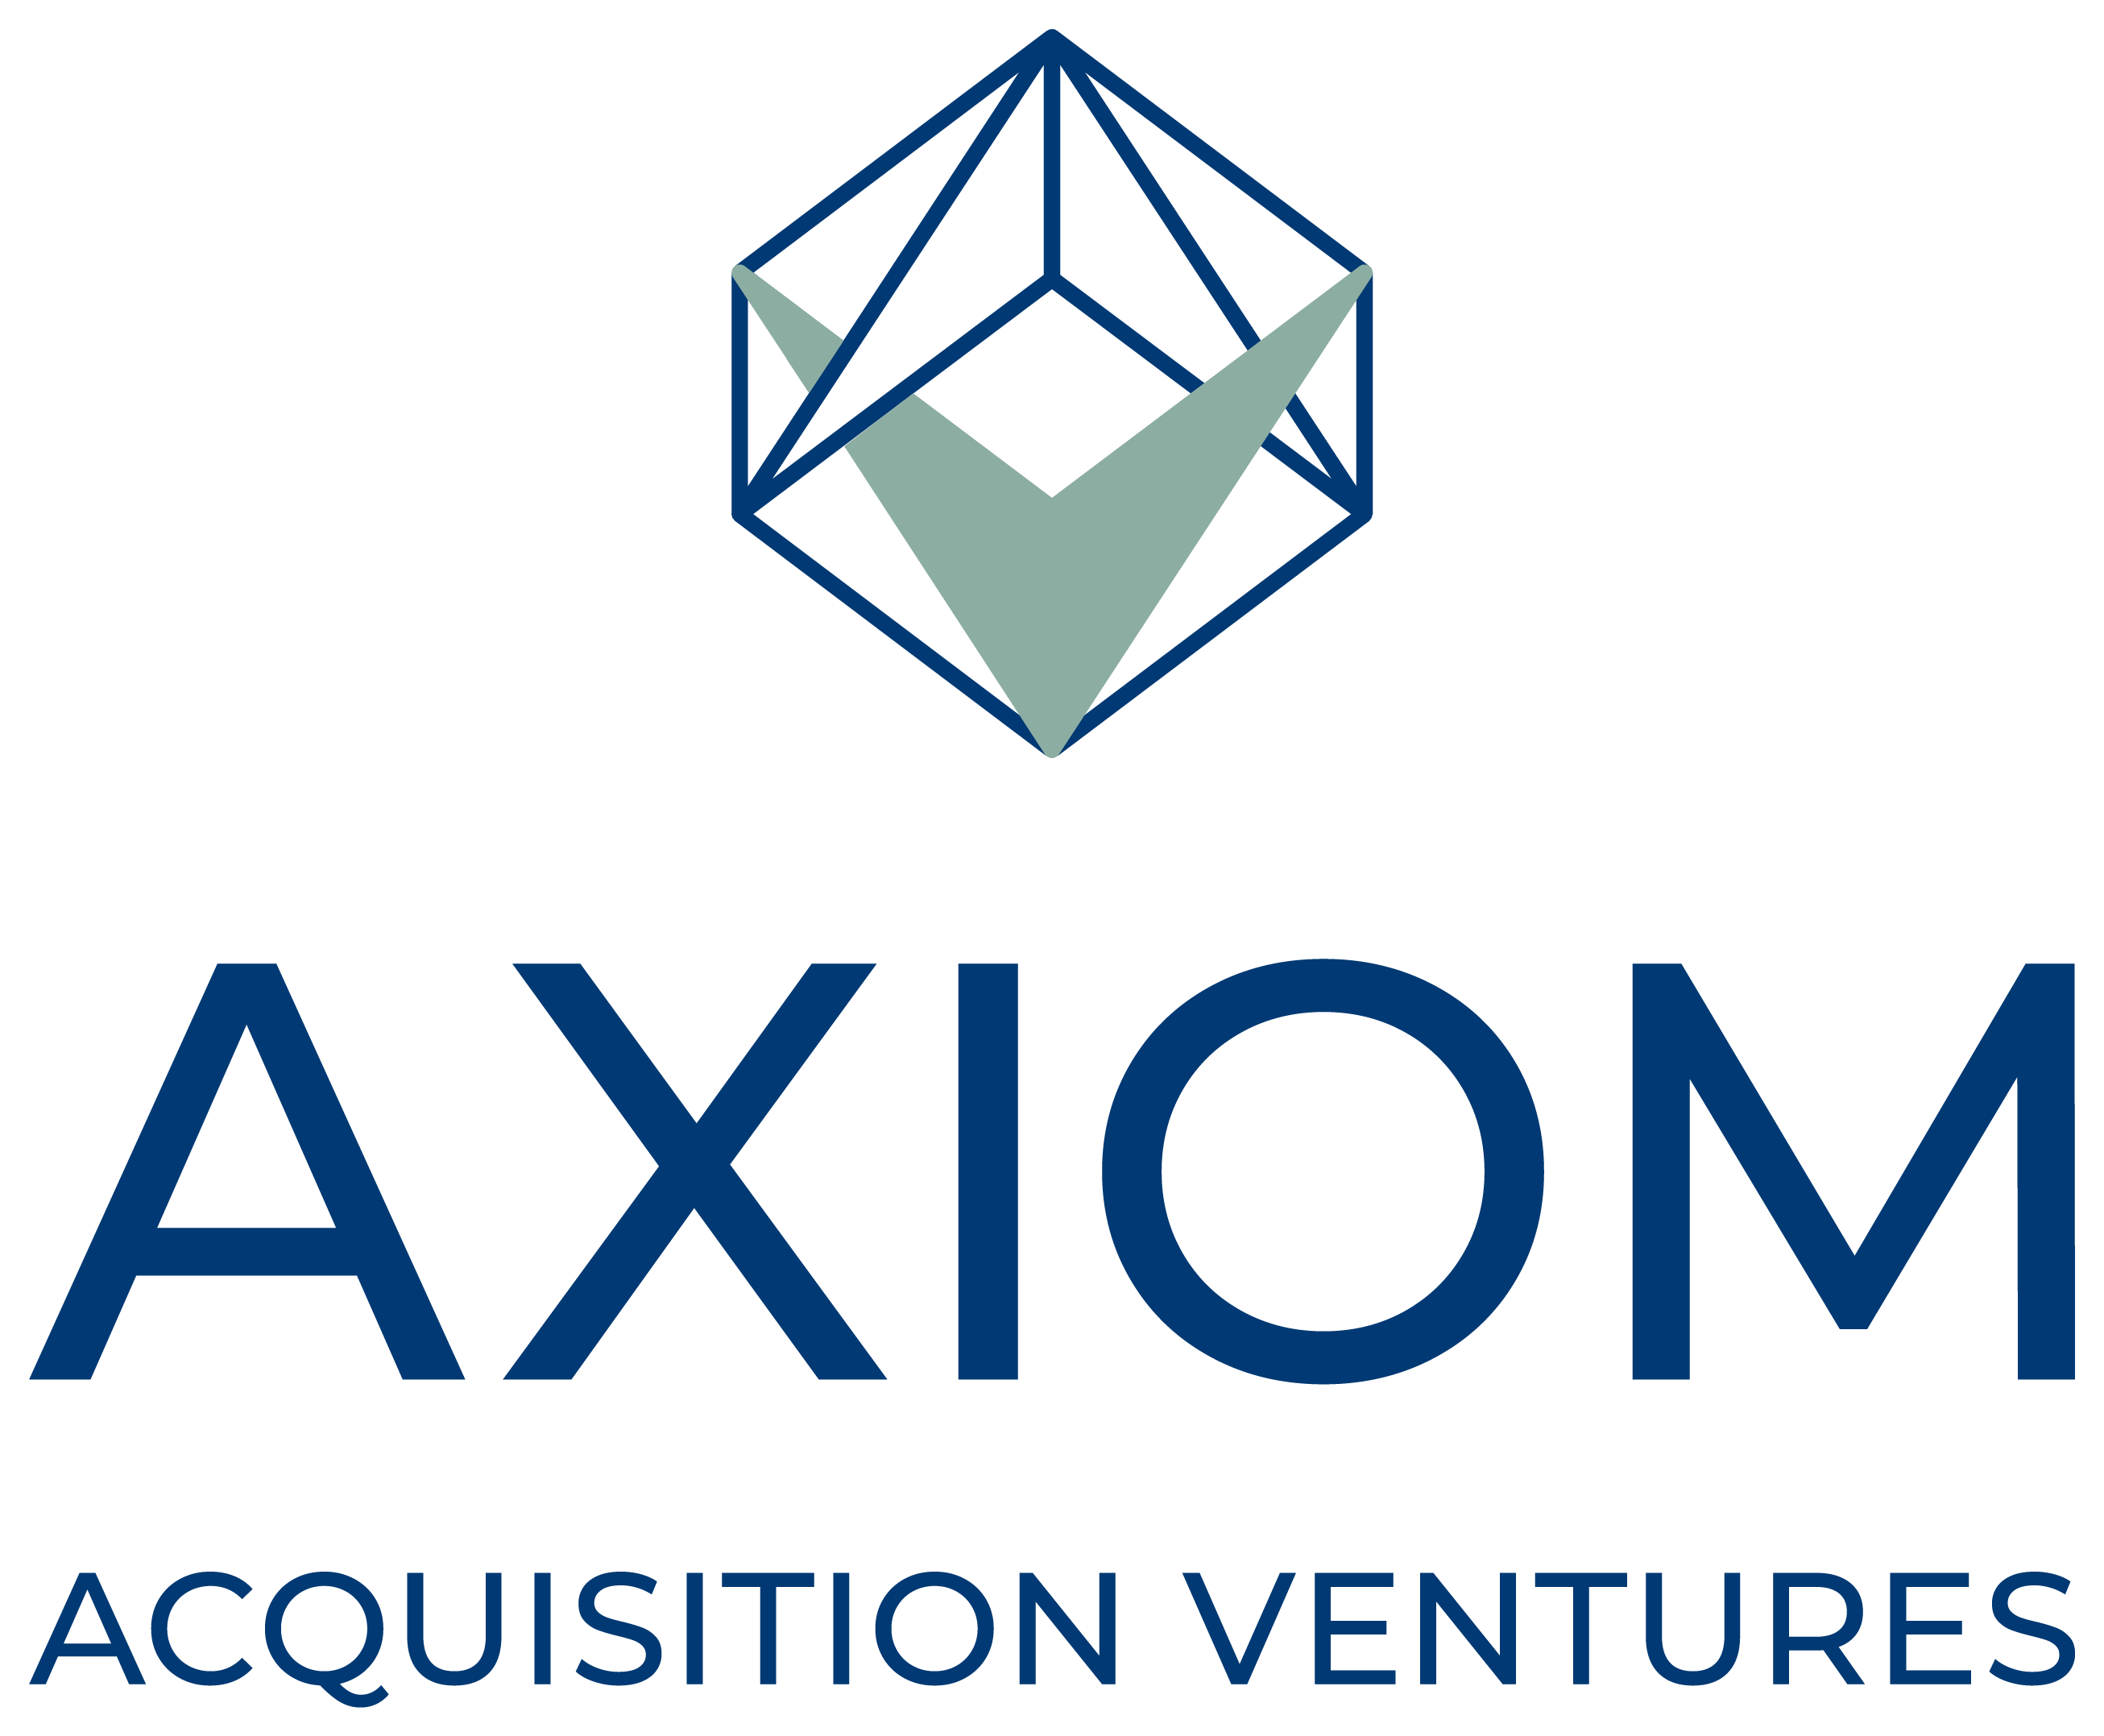 Axiom Acquisition Ventures